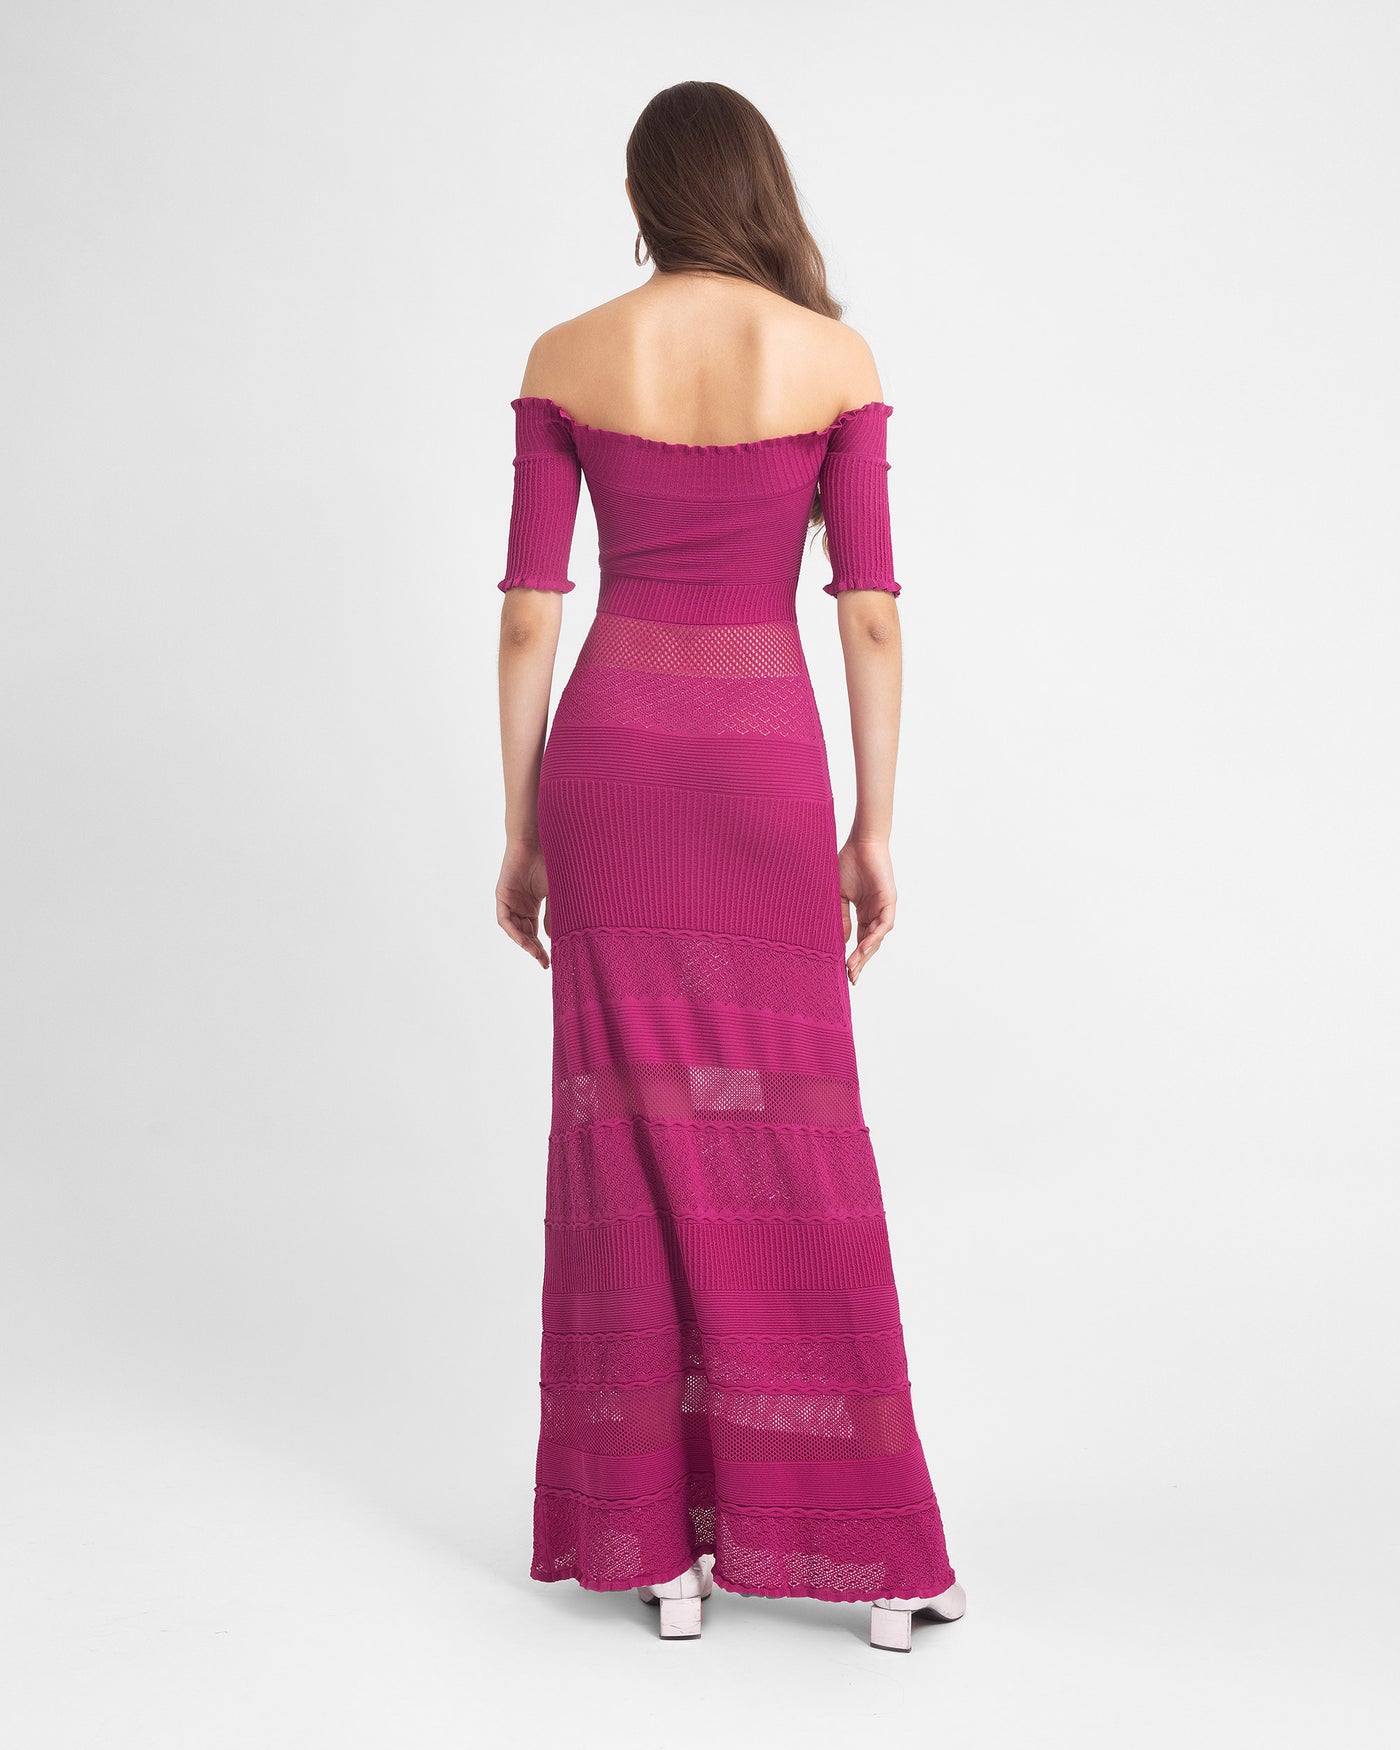 Straight Knit Fuchsia Dress